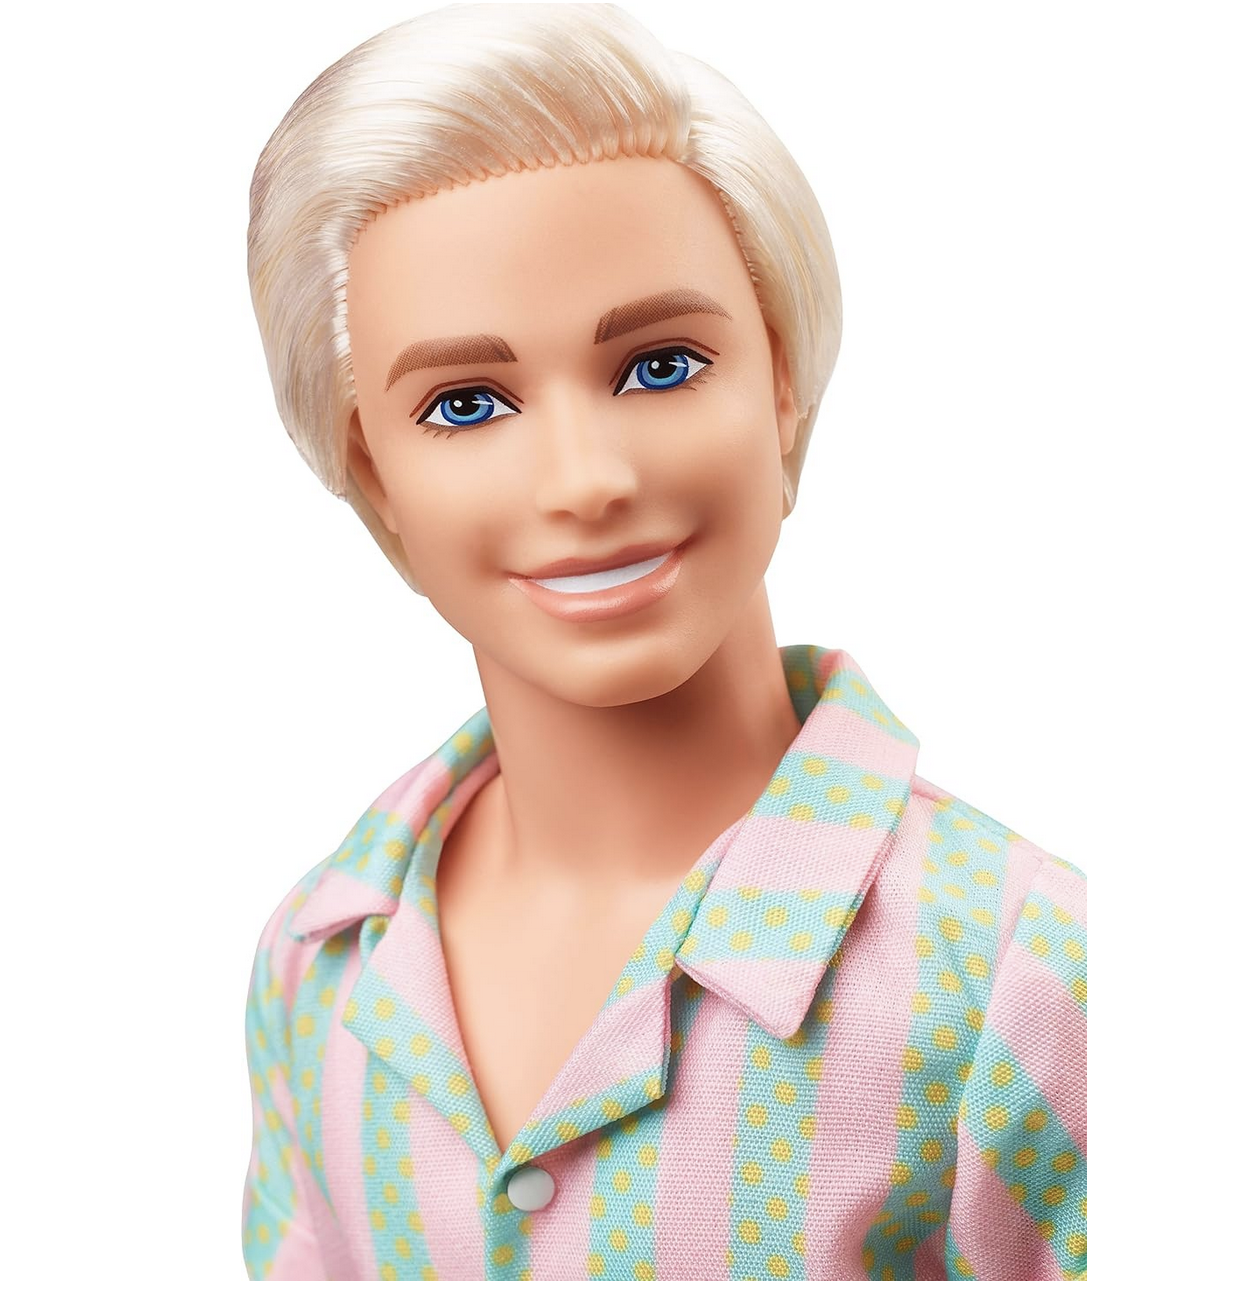 EE distribution Barbie Movie Ken Doll in Striped Matching Set